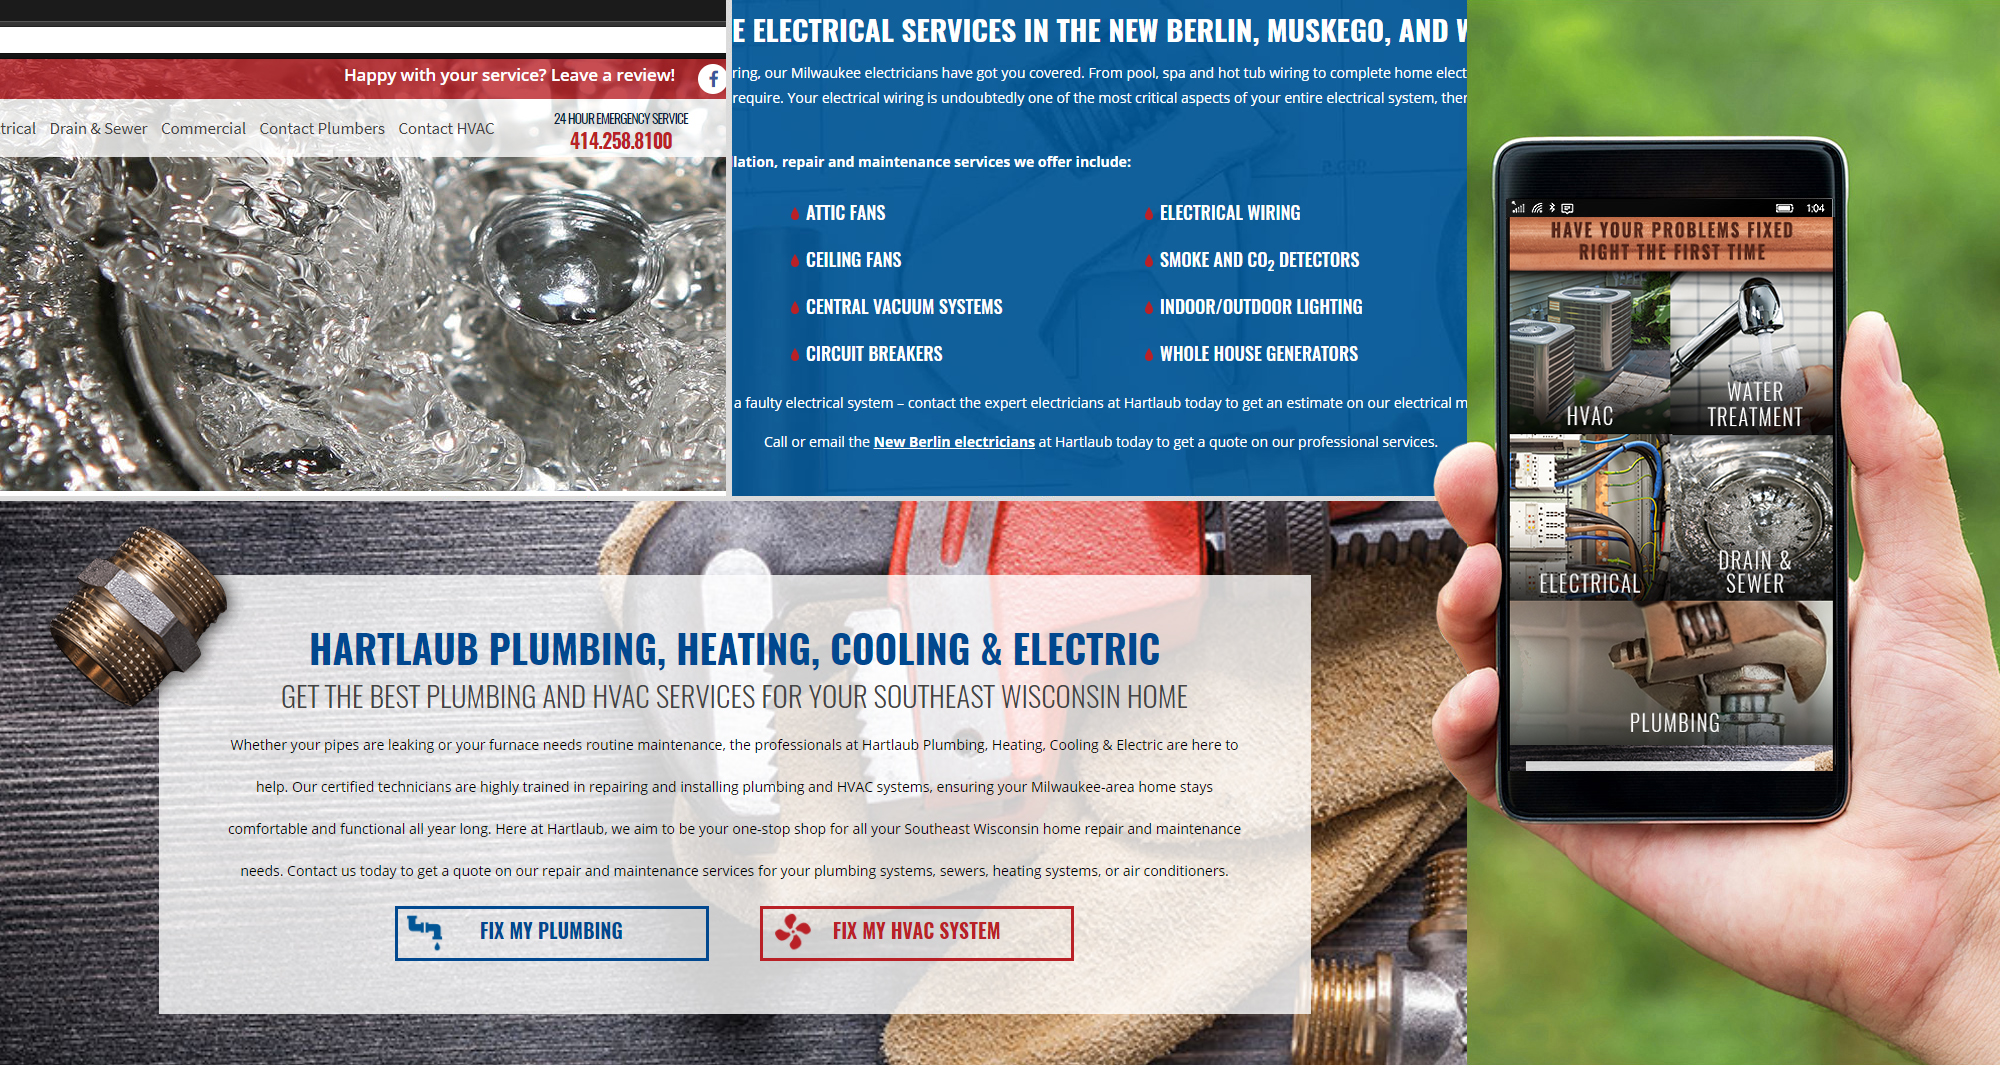 Milwaukee web marketing for Hartlaub Plumbing, Heating, Cooling and Electric Company